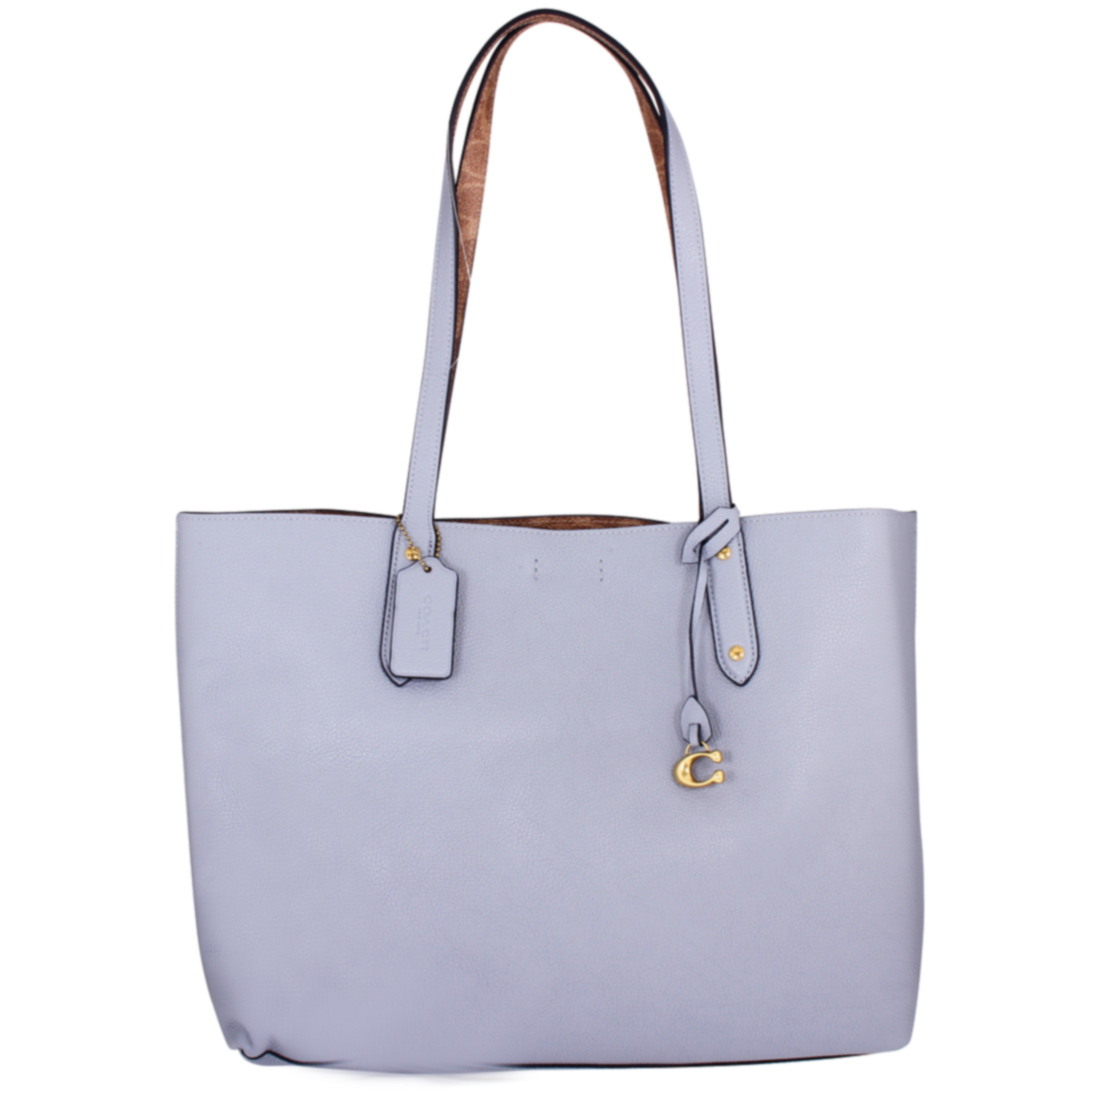 Coach Central Ladies Medium Blue Leather Tote Bag 74104B4P38 | eBay